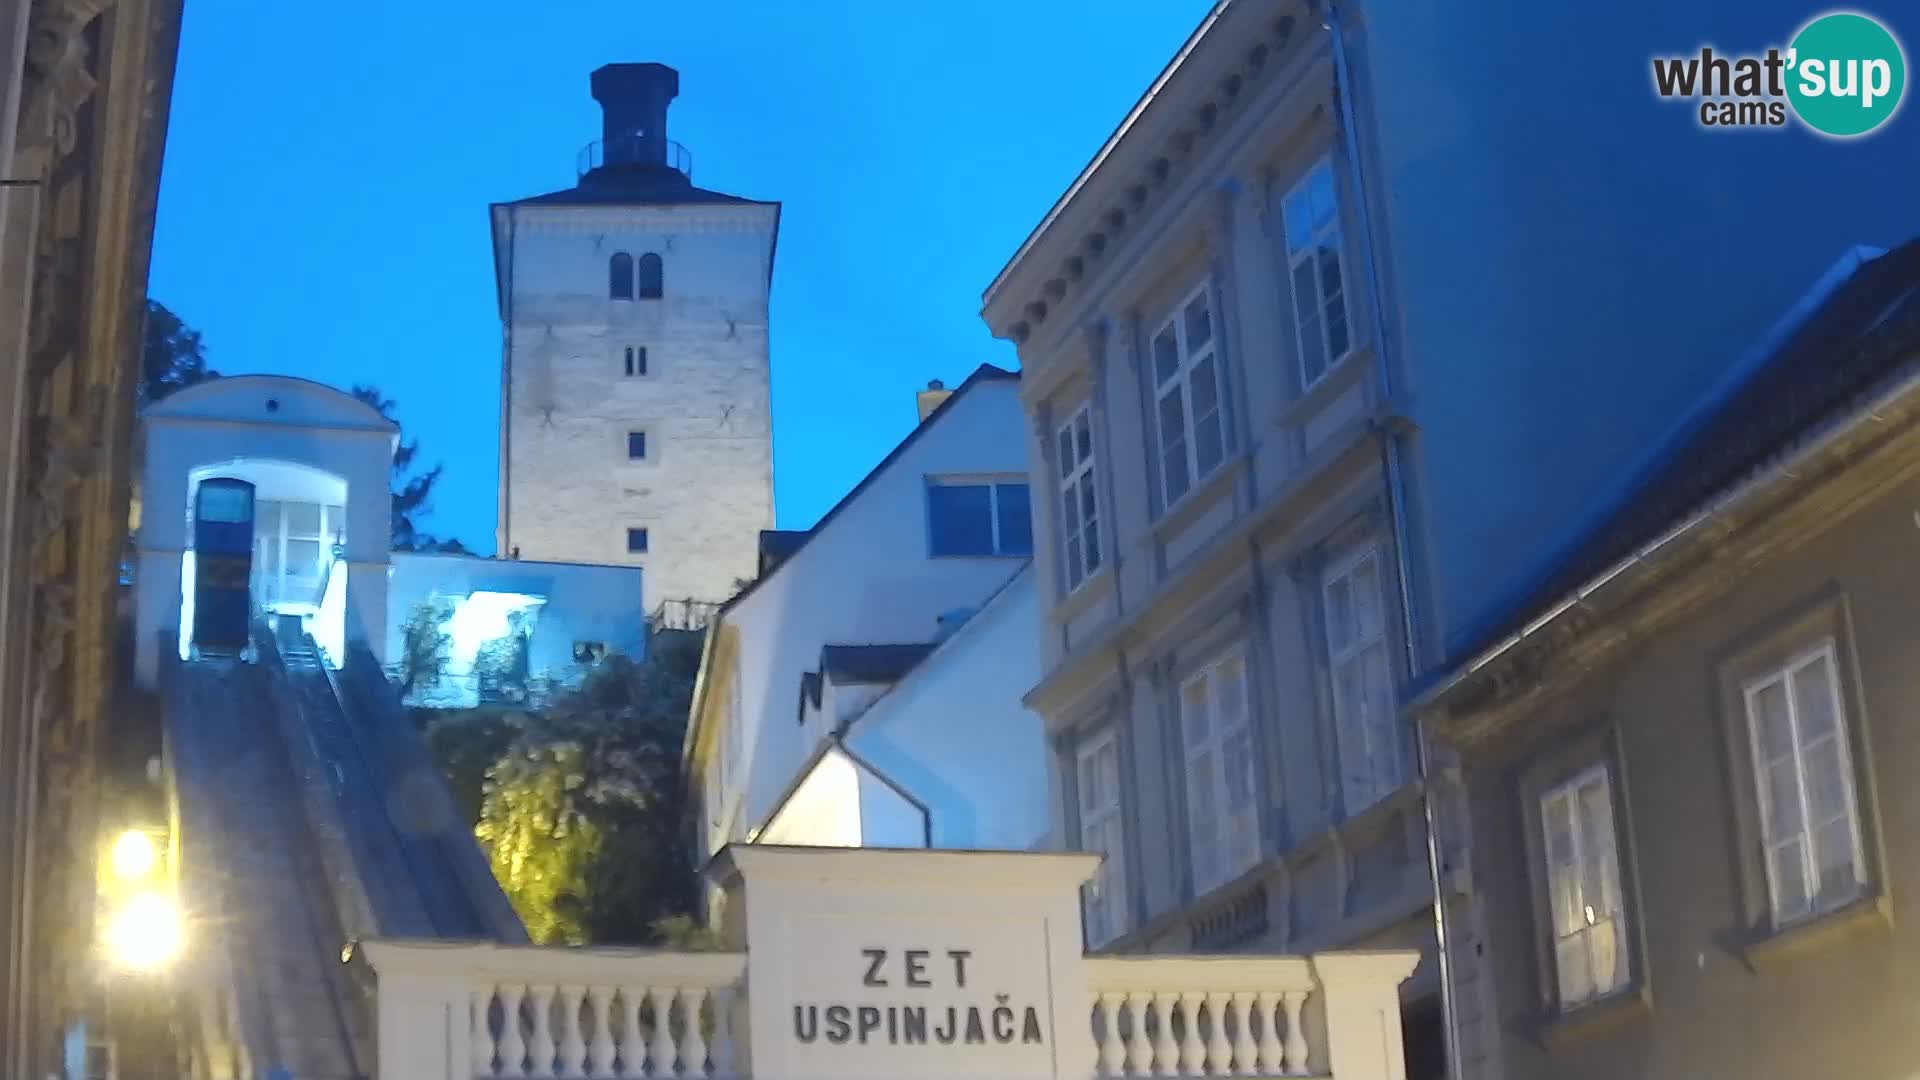 Zagrebačka uspinjača